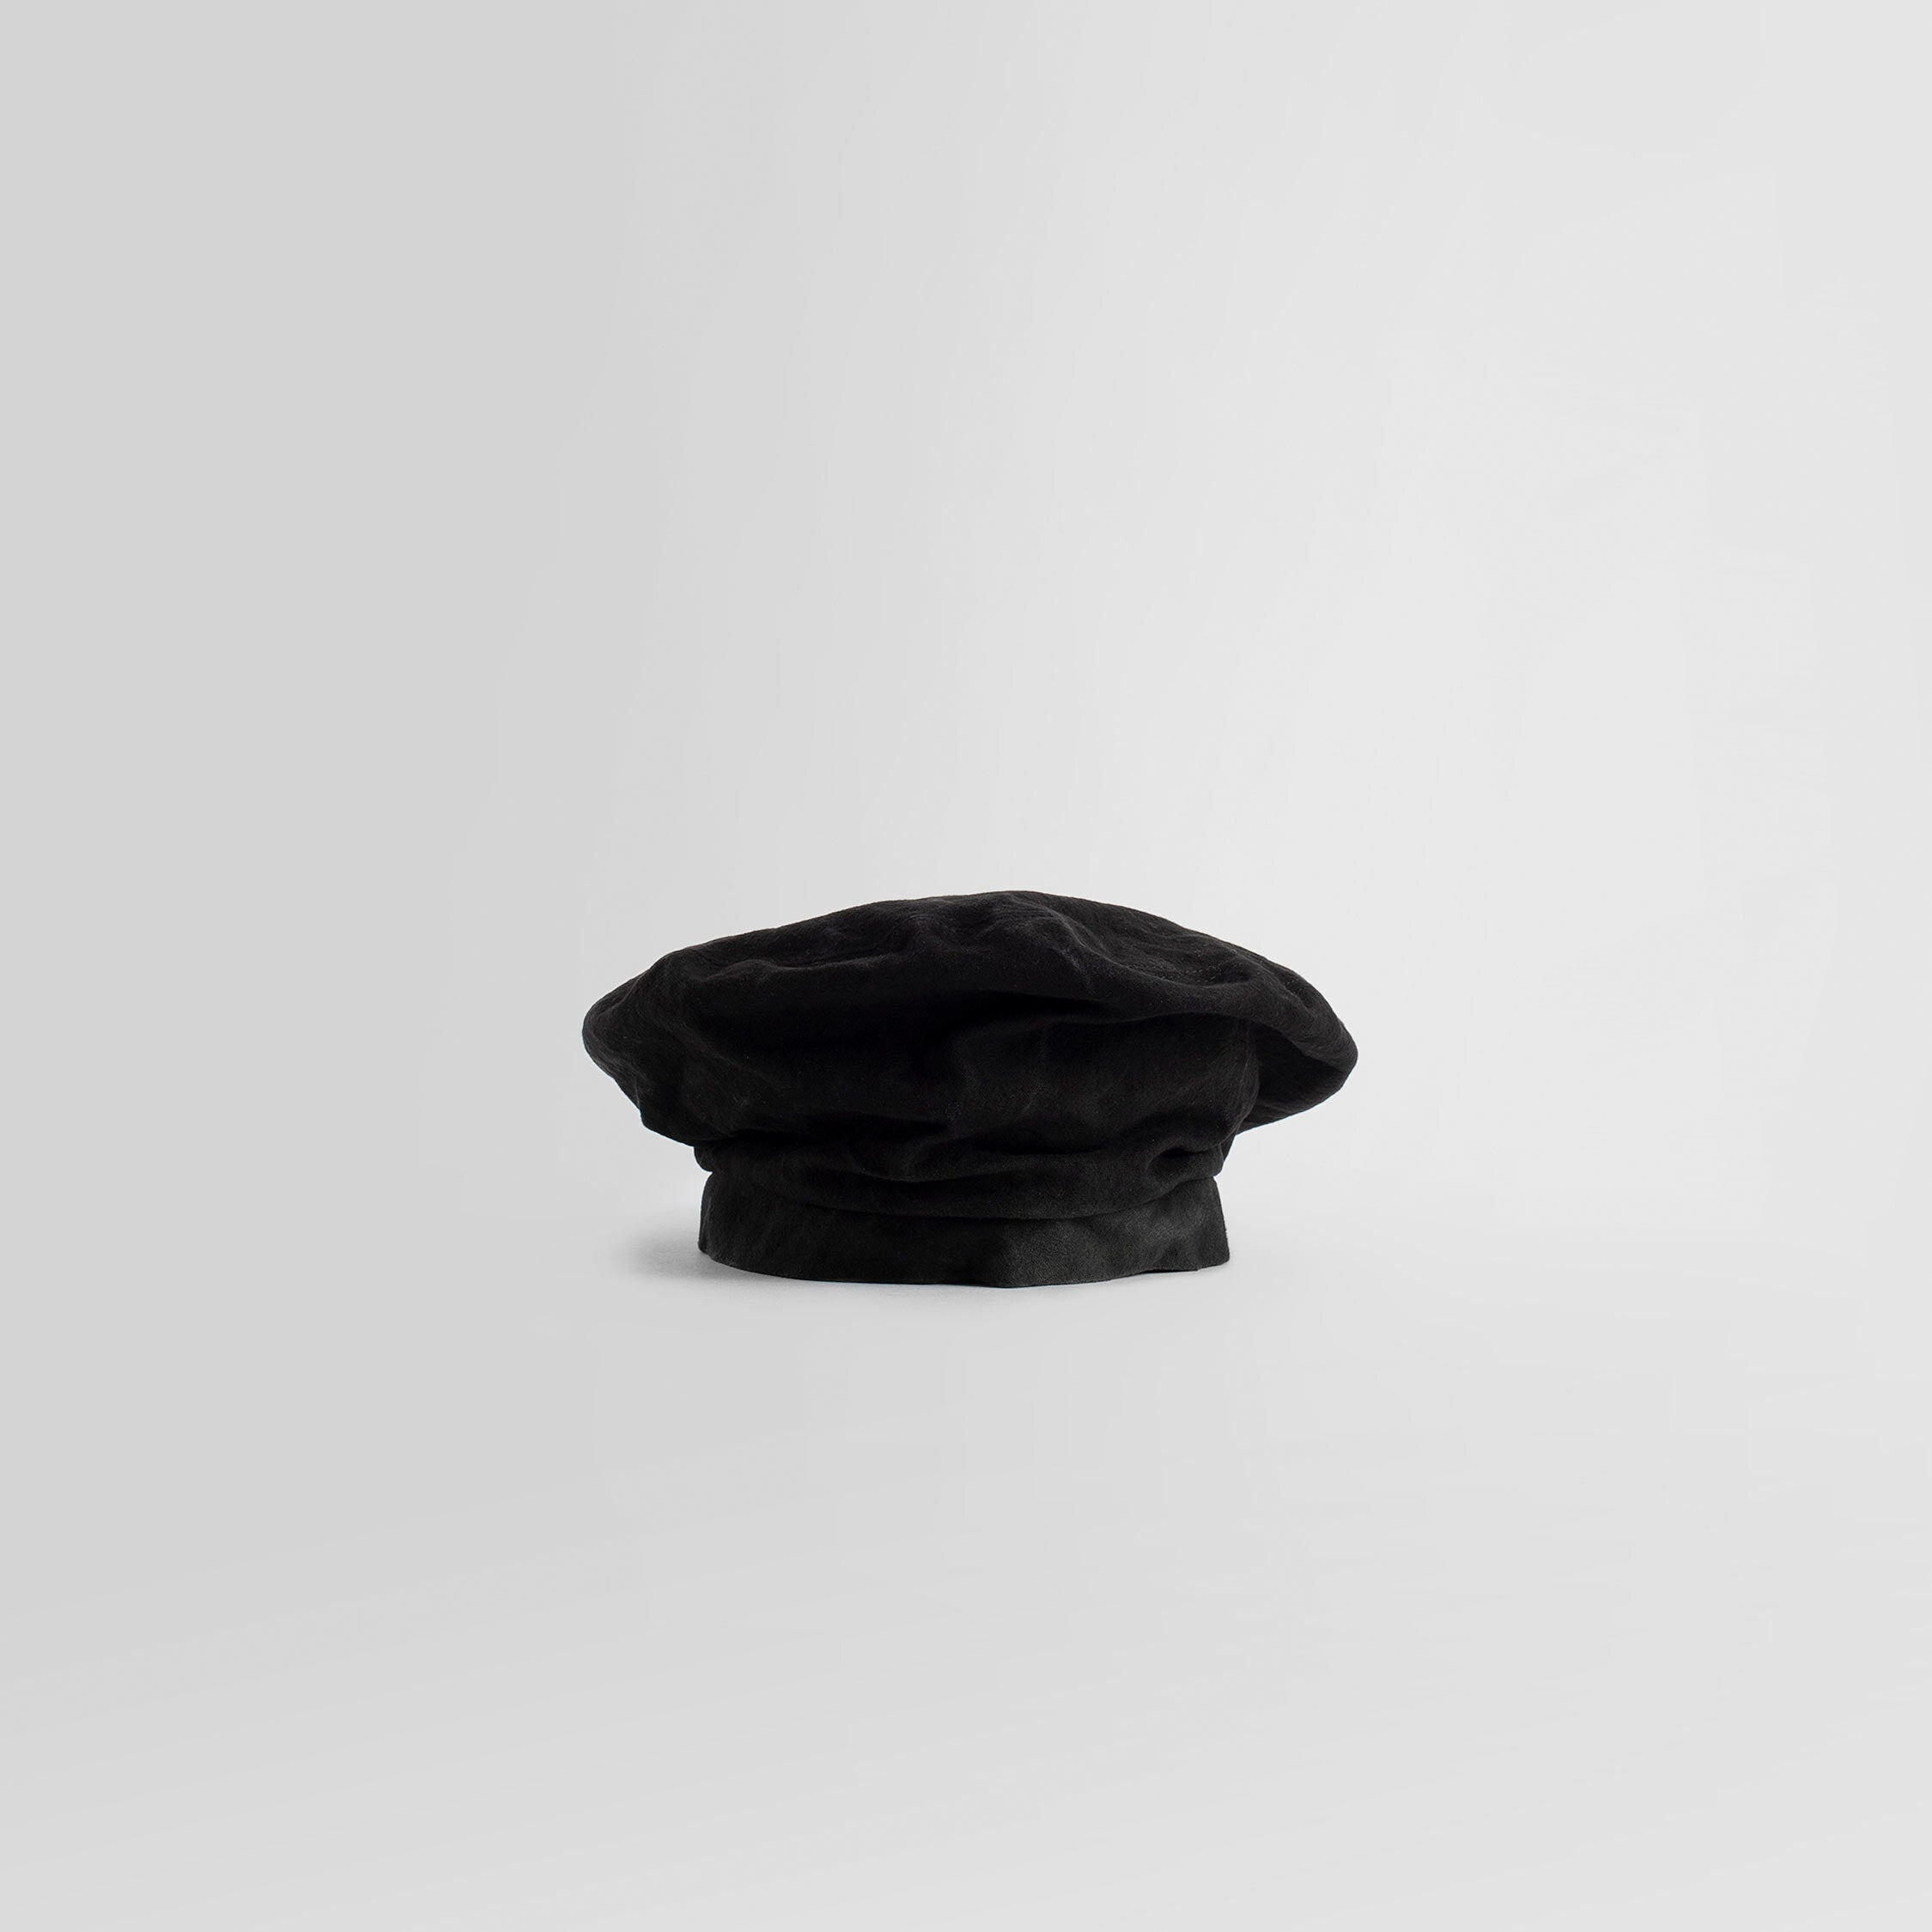 HORISAKI UNISEX BLACK HATS - 5